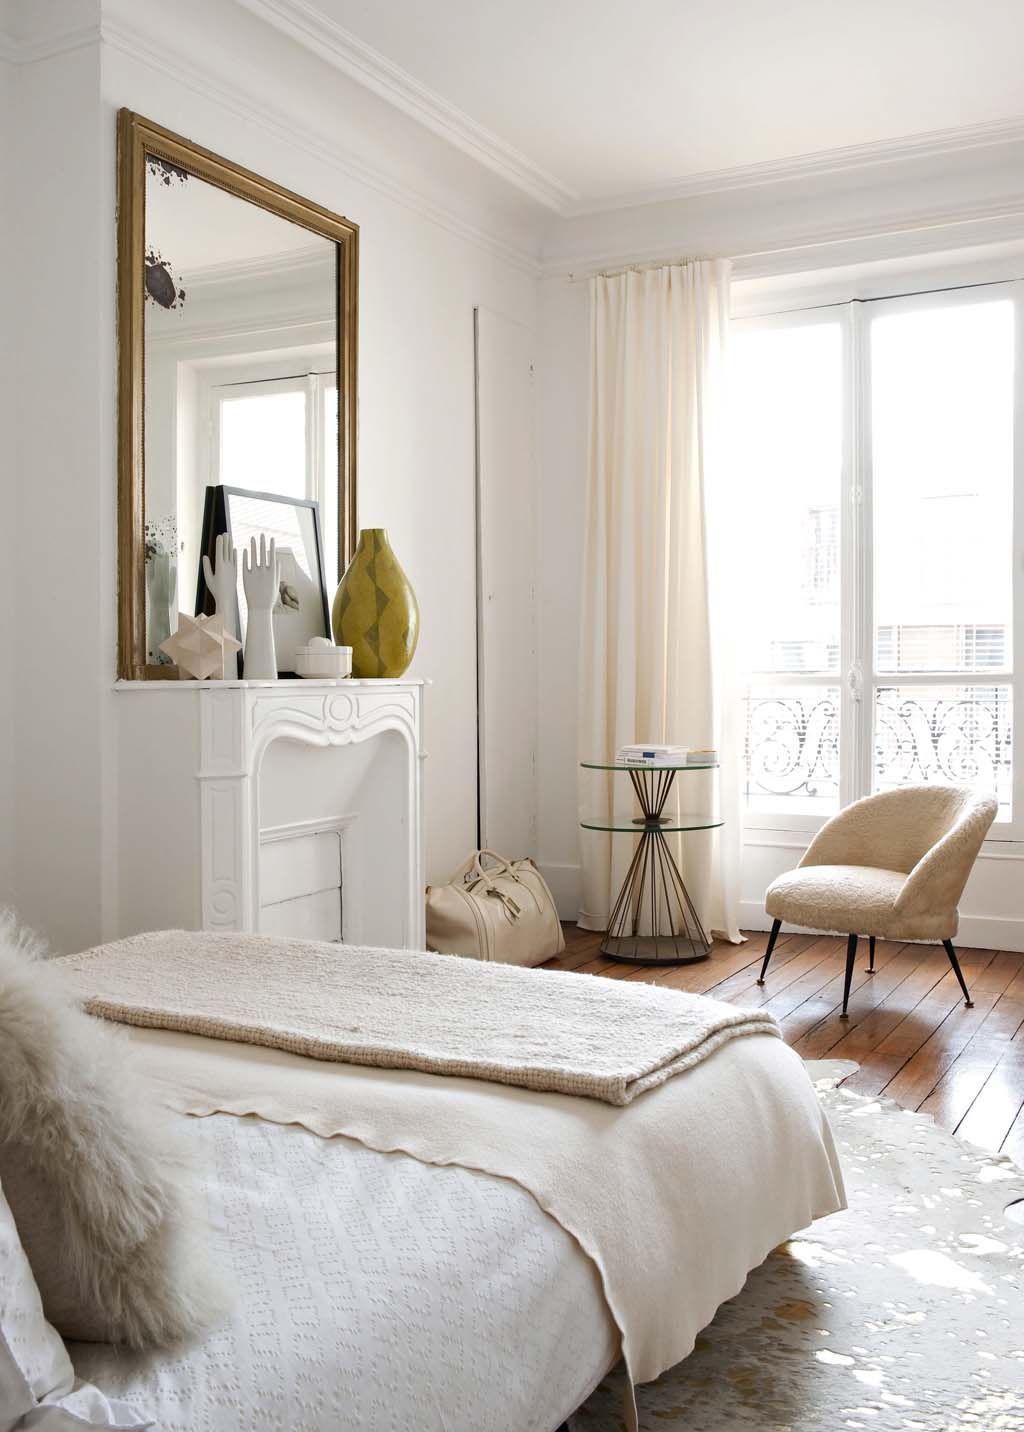 Parisian bedroom decor ideas